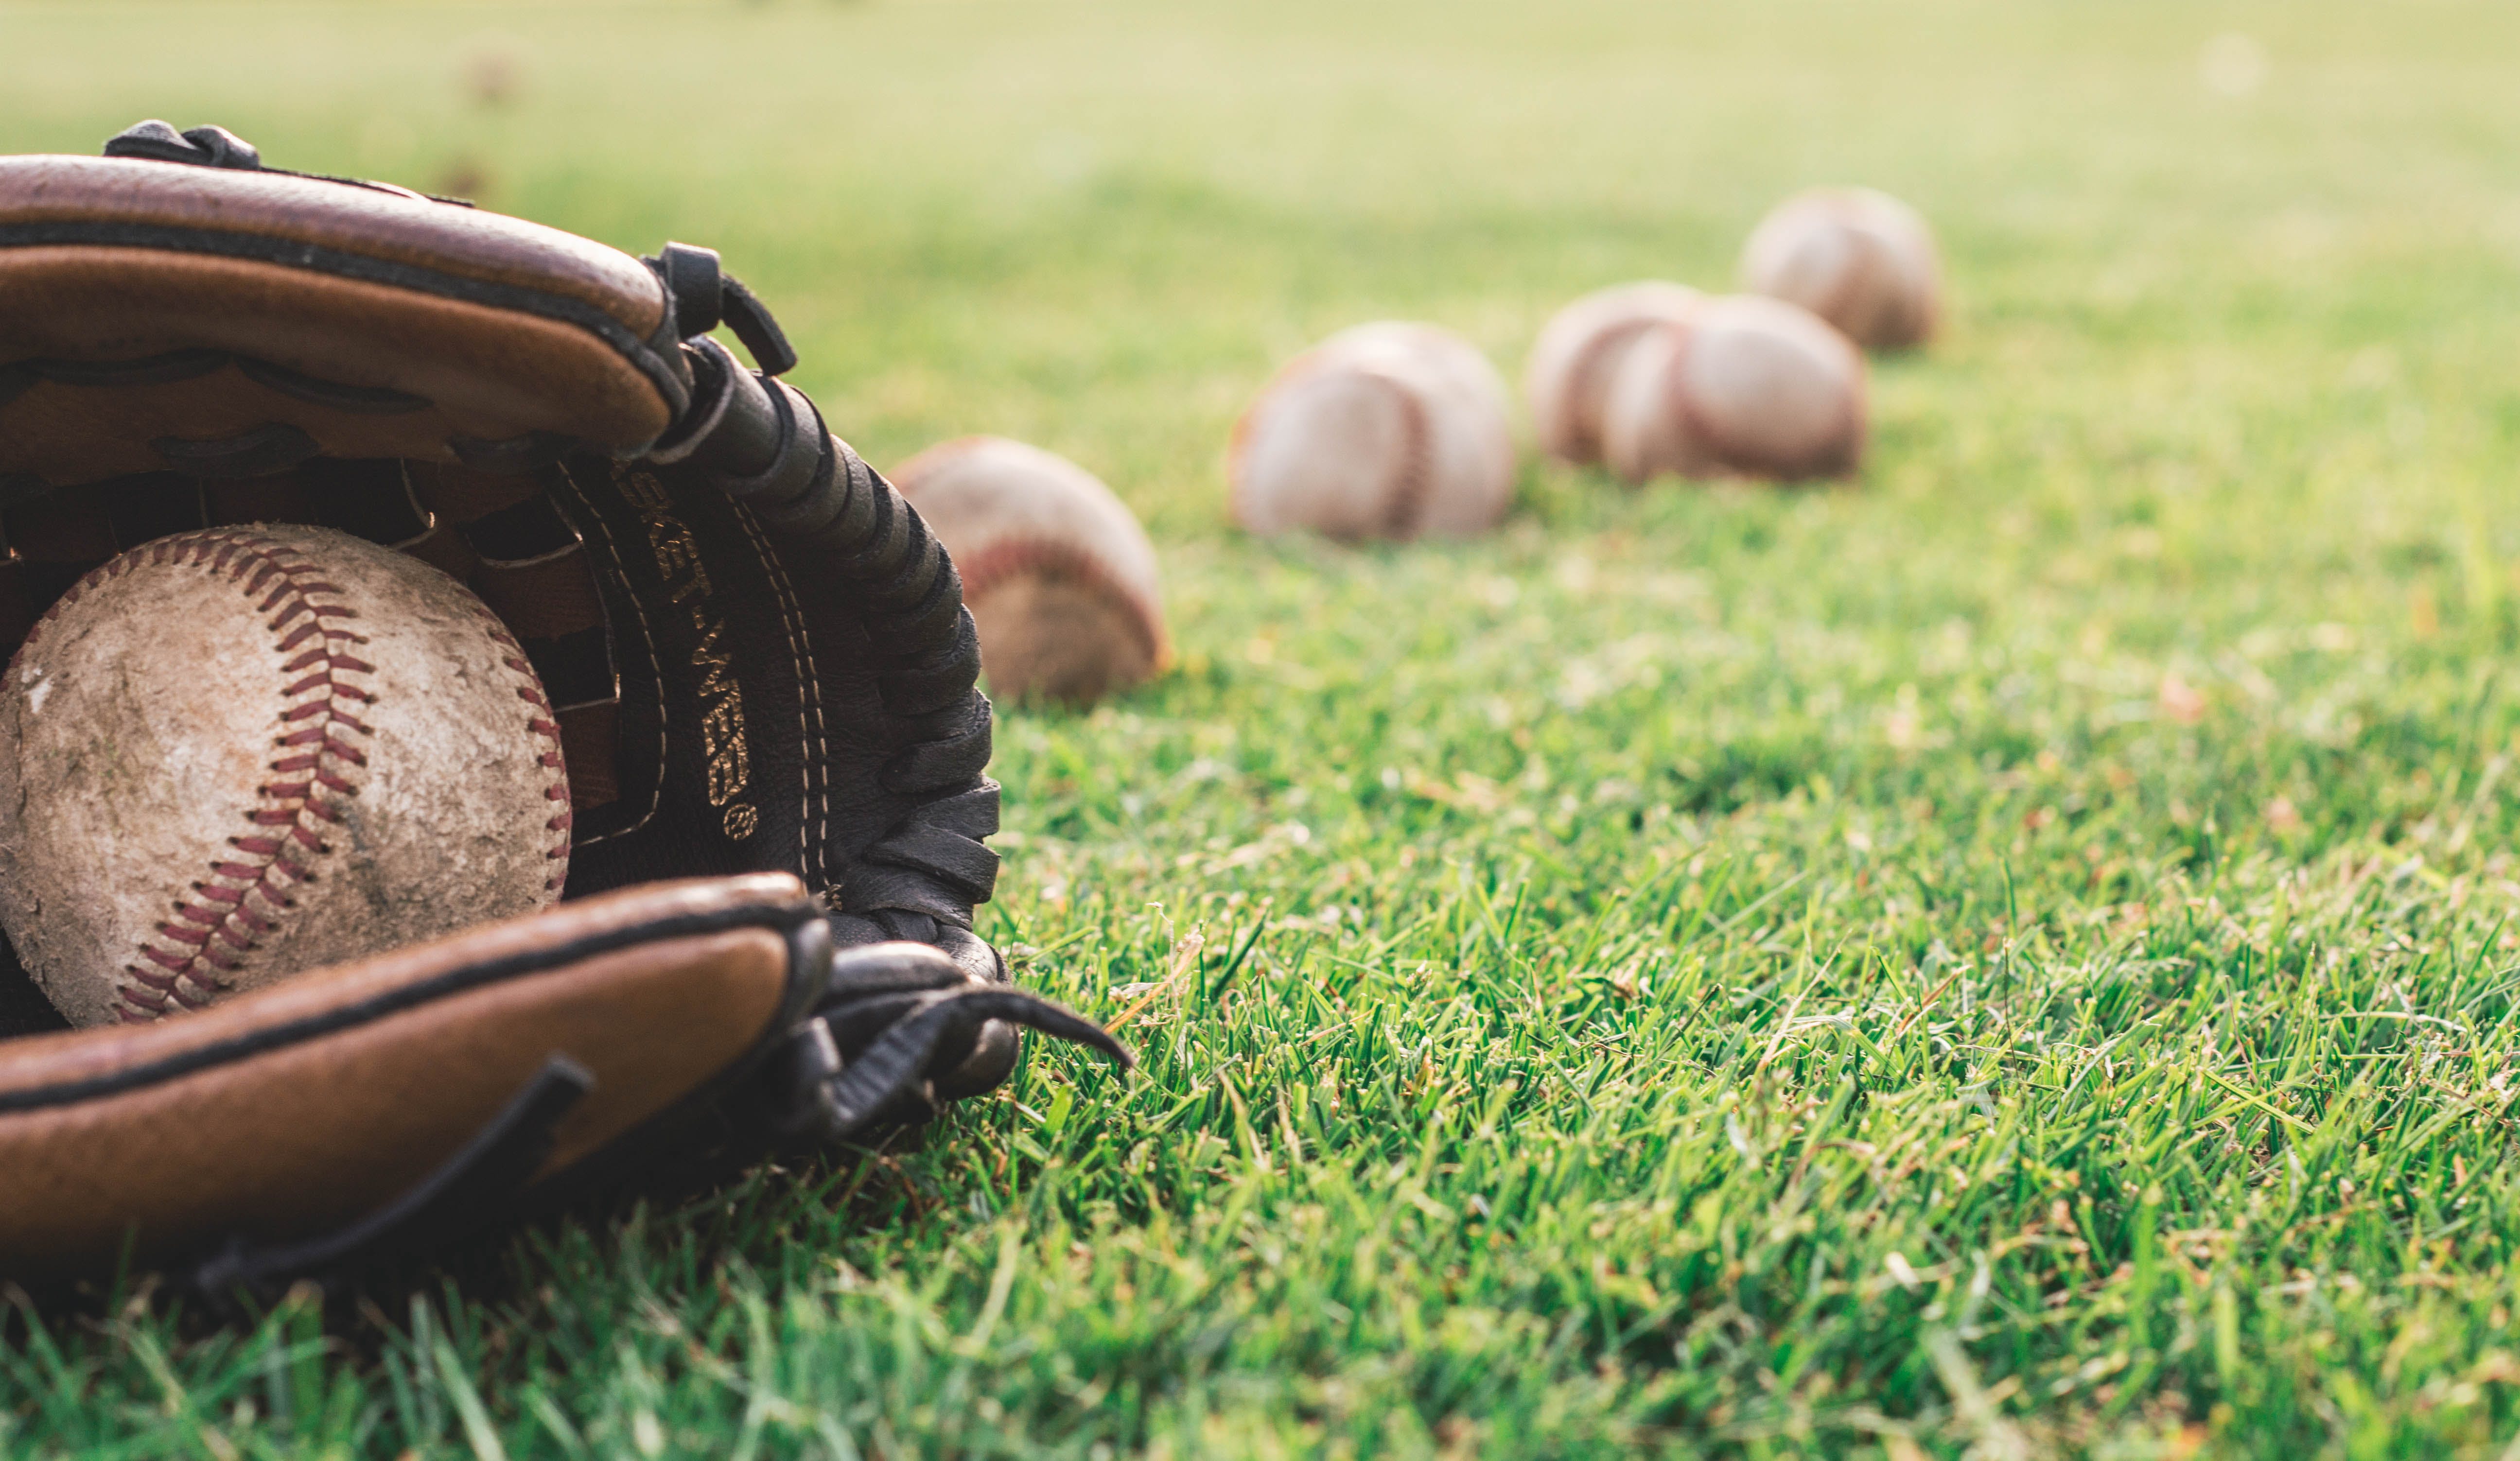 A baseball glove and baseballs on a field.